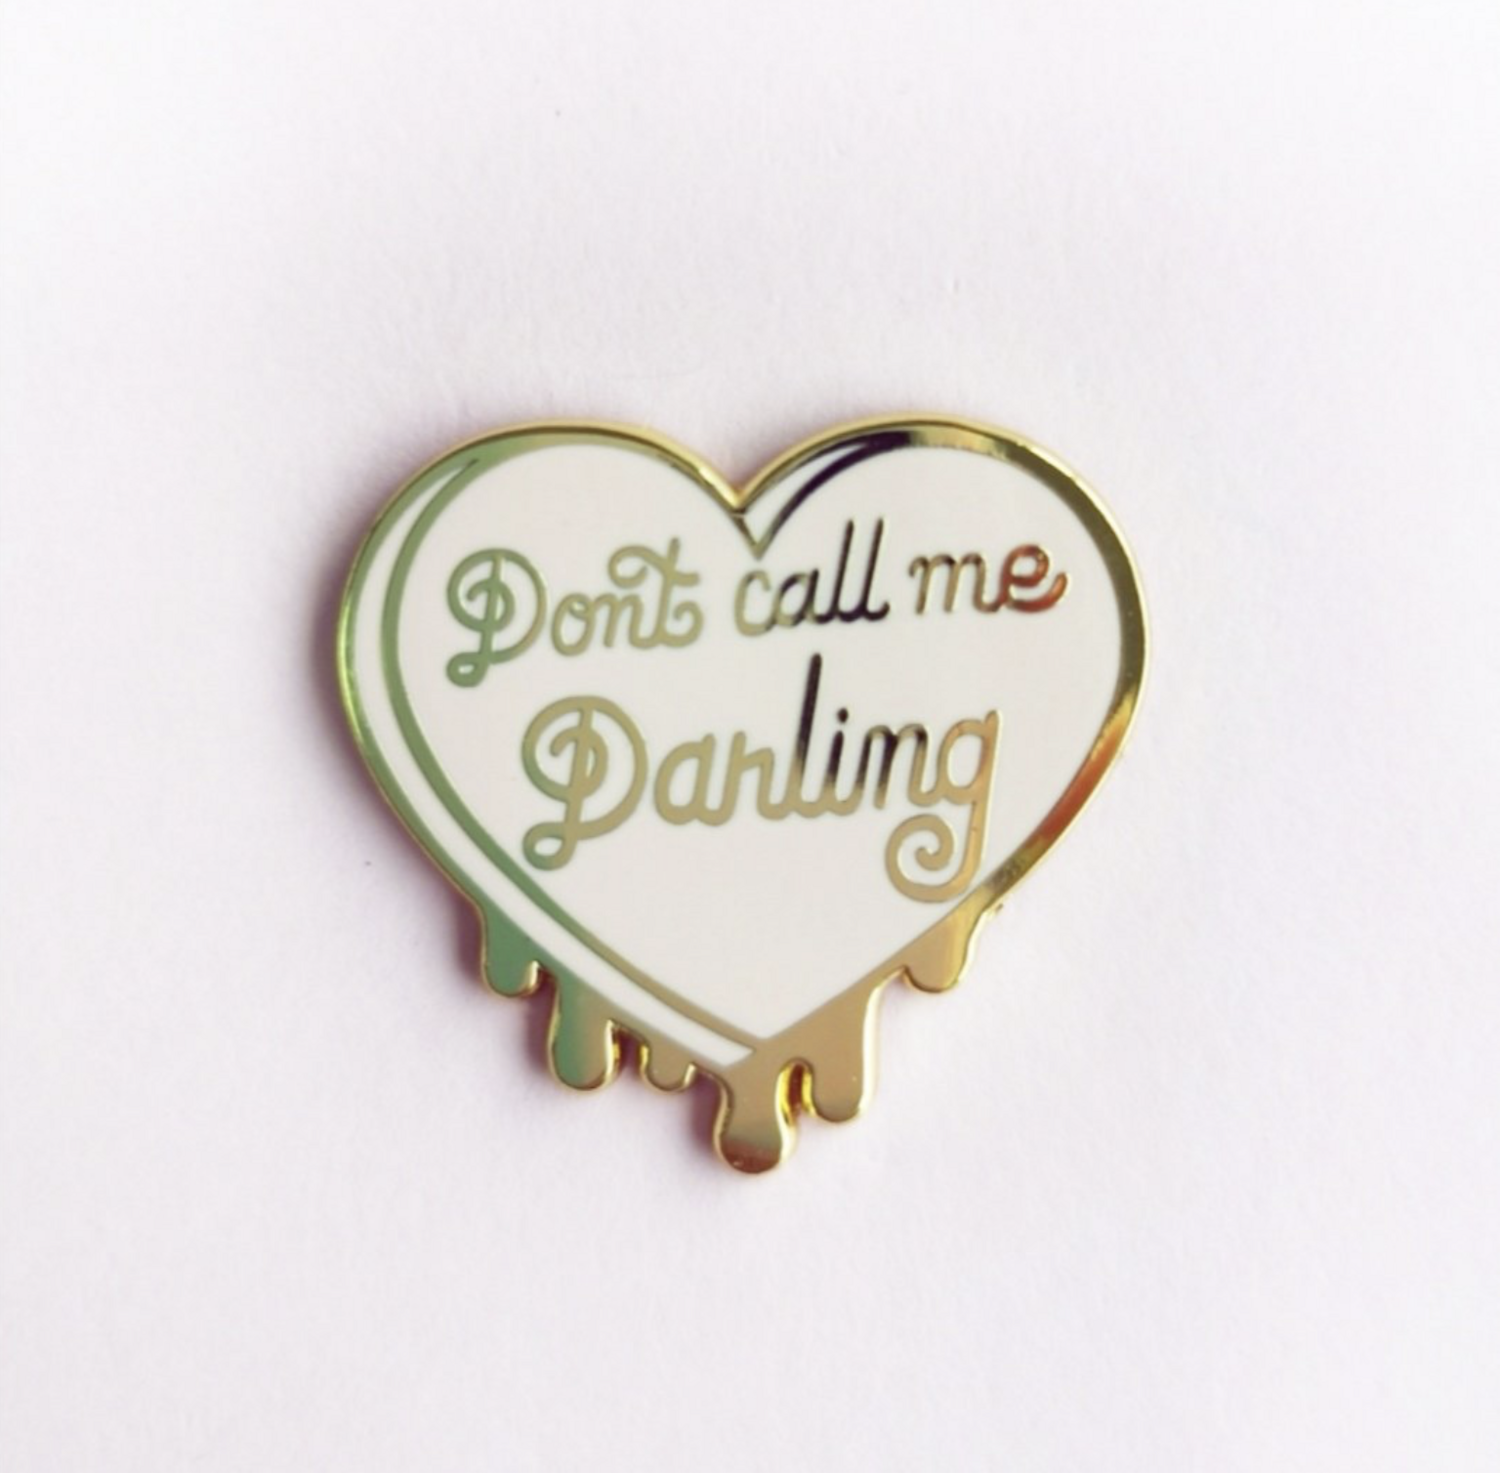 Don't call me Darling pin